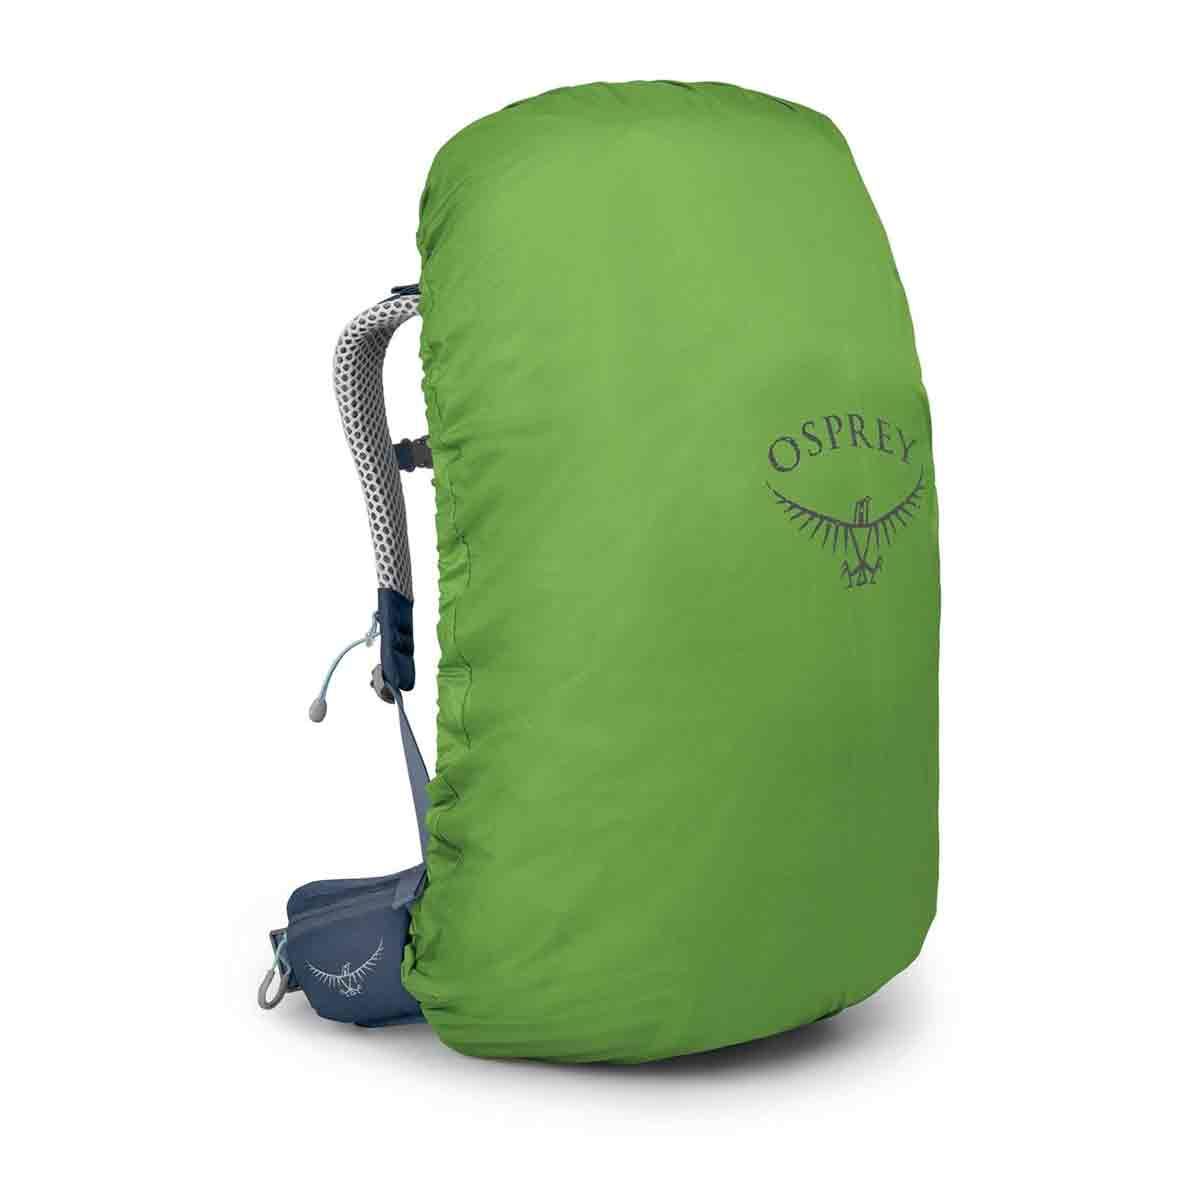 Osprey Sirrus 36 hiking backpack - Men